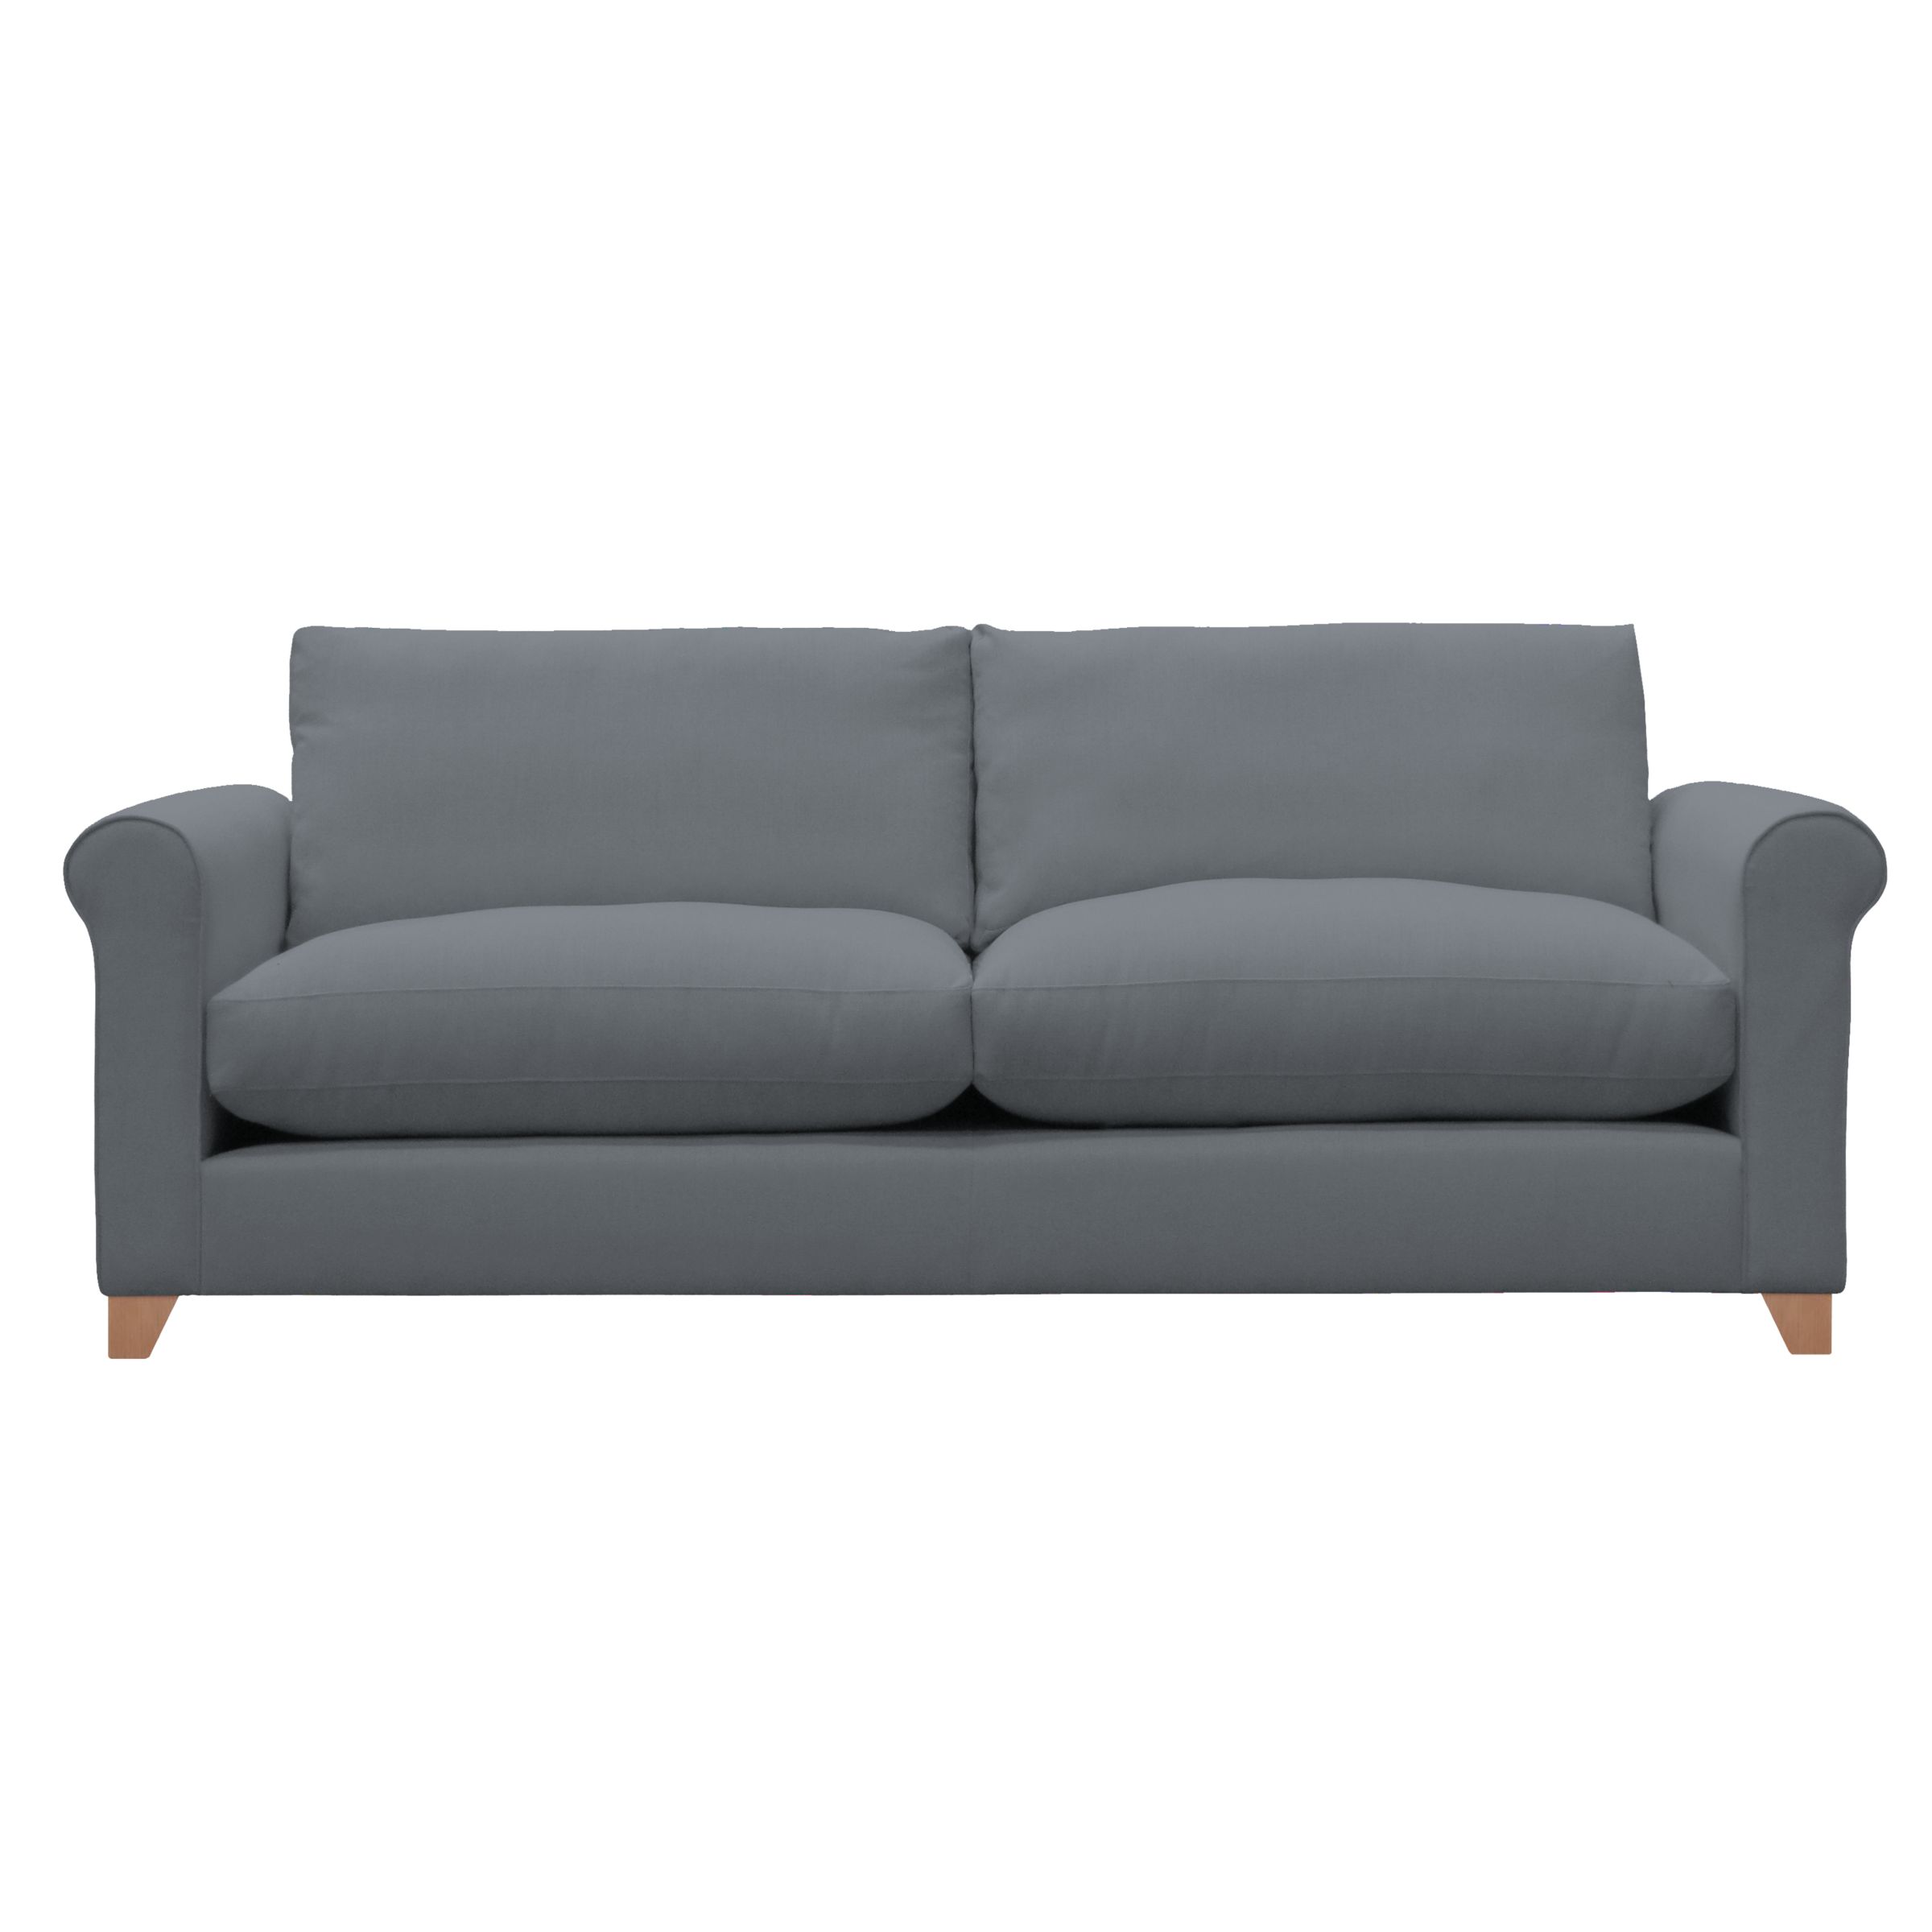 John Lewis Options Scroll Arm Grand Sofa, Eaton Grey, width 217cm